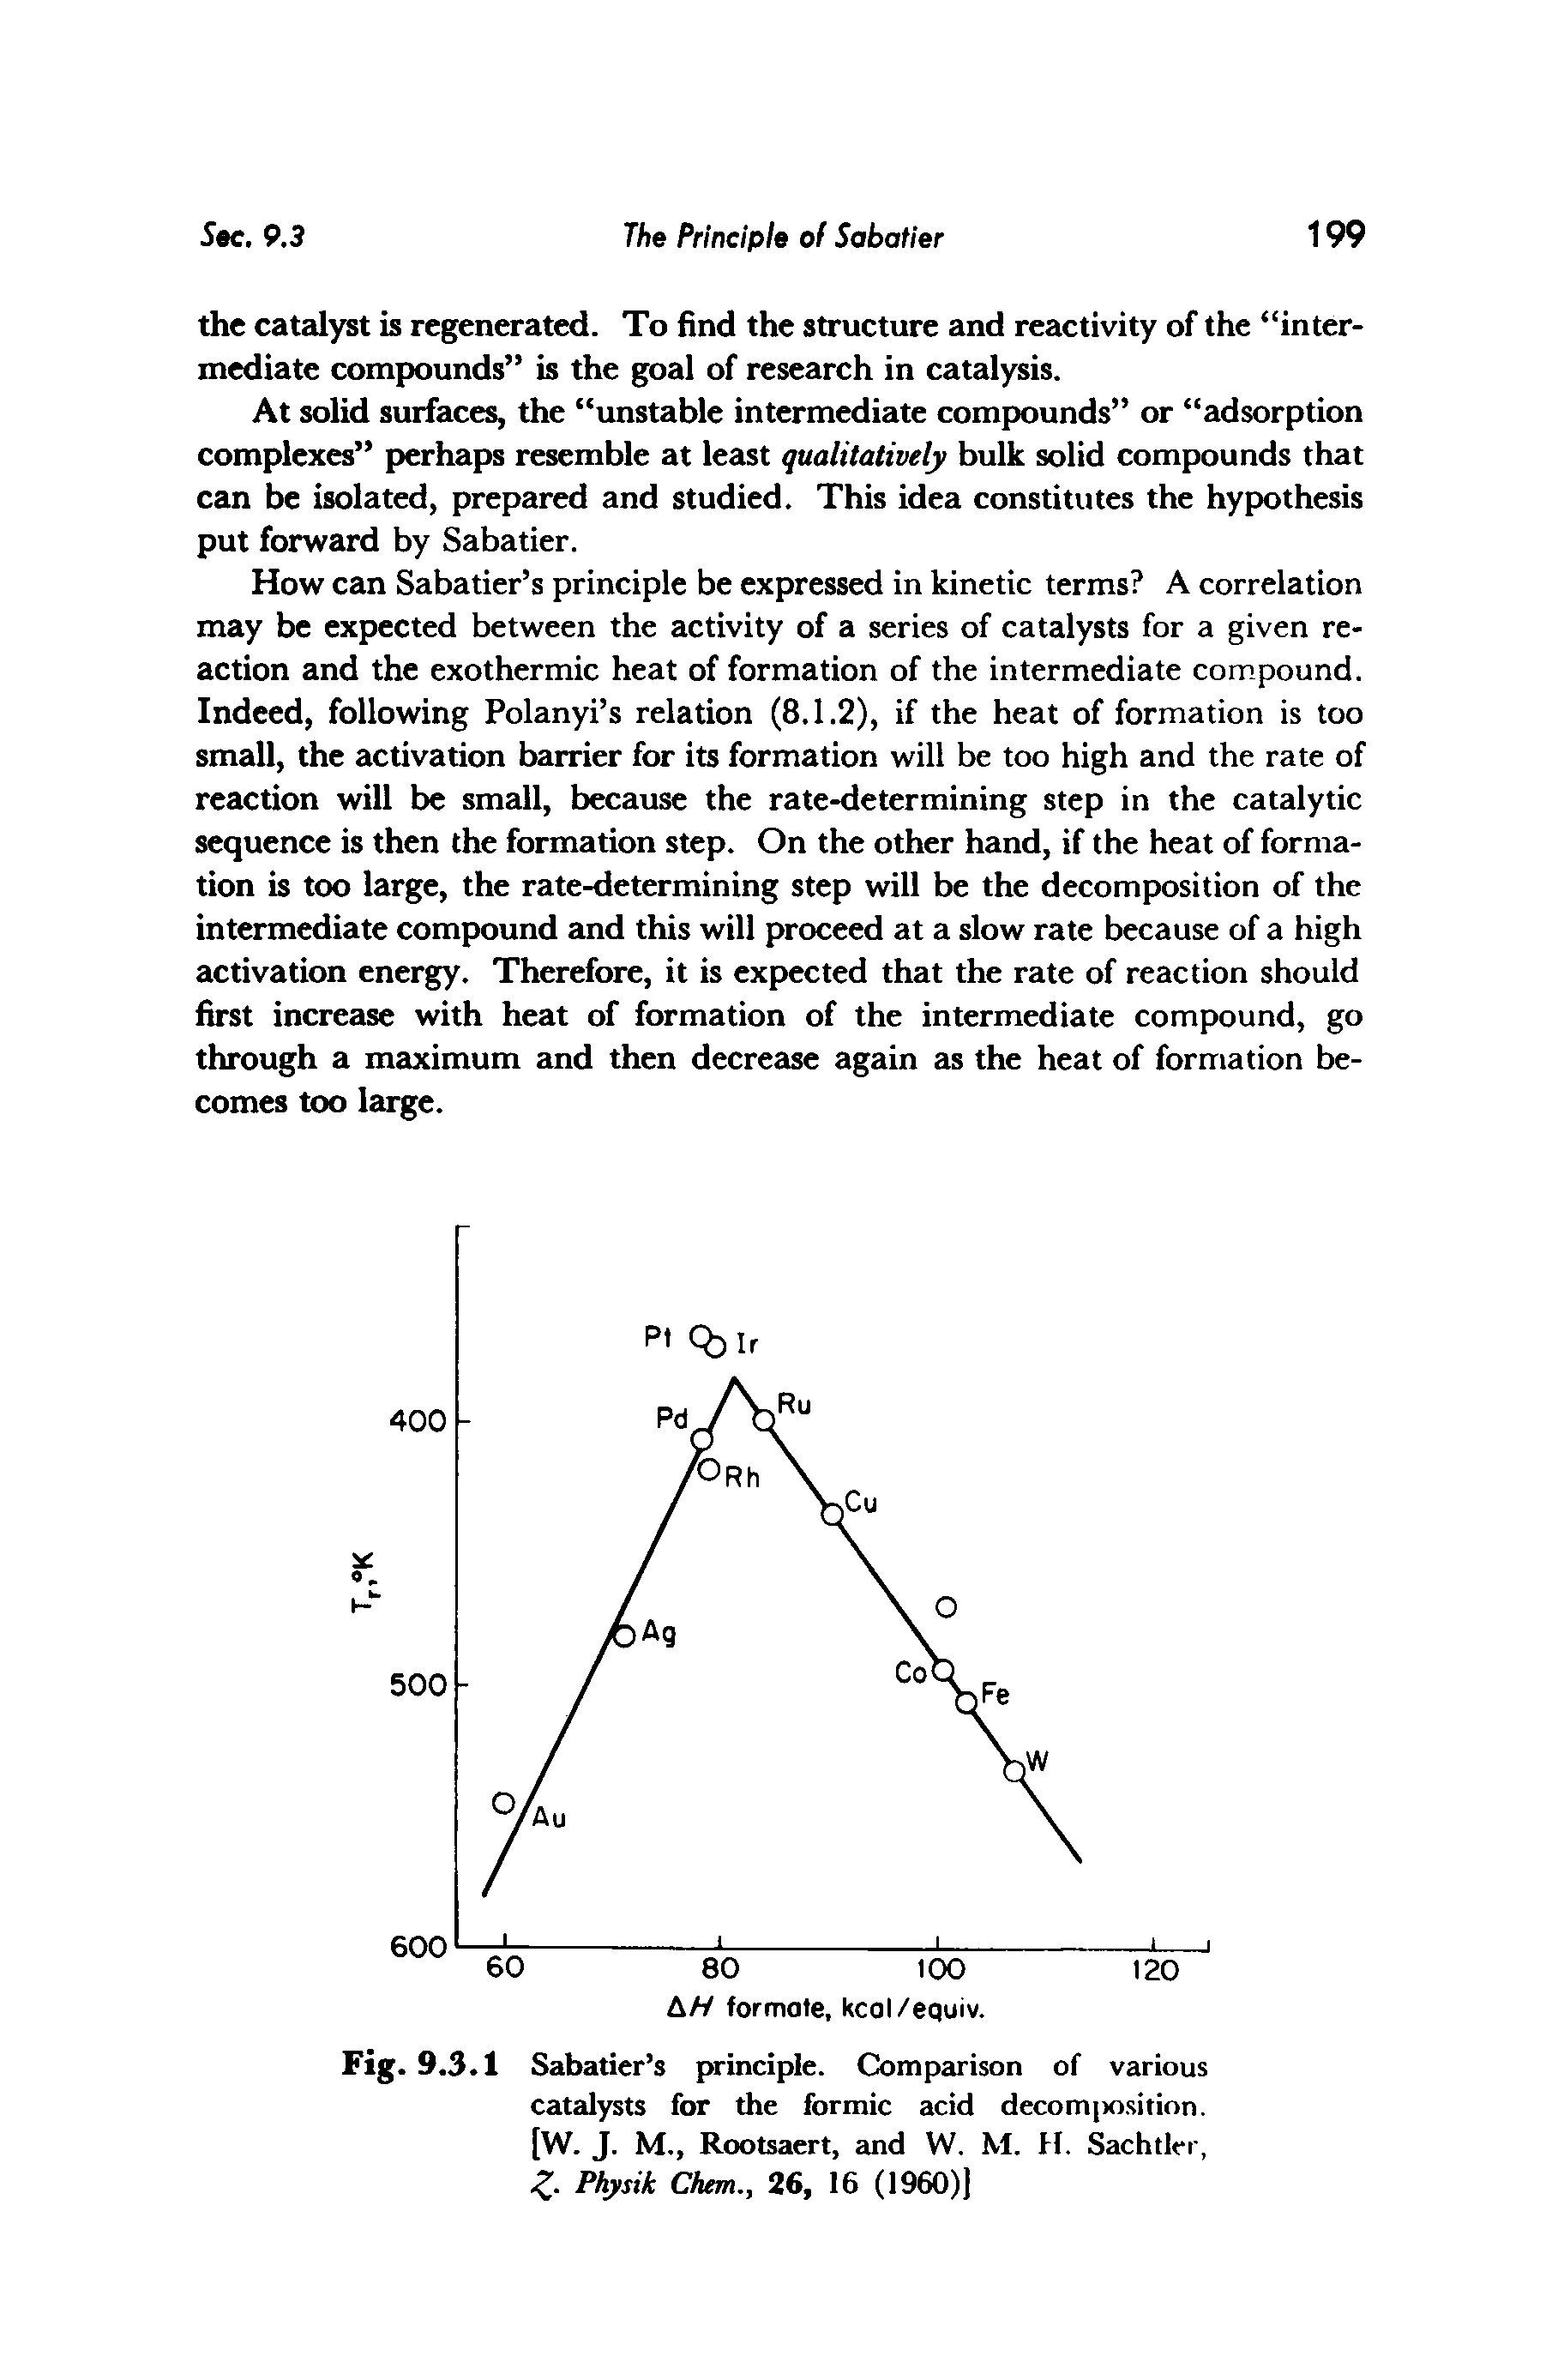 Fig. 9.3.1 Sabatier s principle. Comparison of various catalysts for the formic acid decom x)sition. [W. J. M., Rootsaert, and W. M. H. Sachtler, Z- Physik Chem., 26, 16 (I960))...